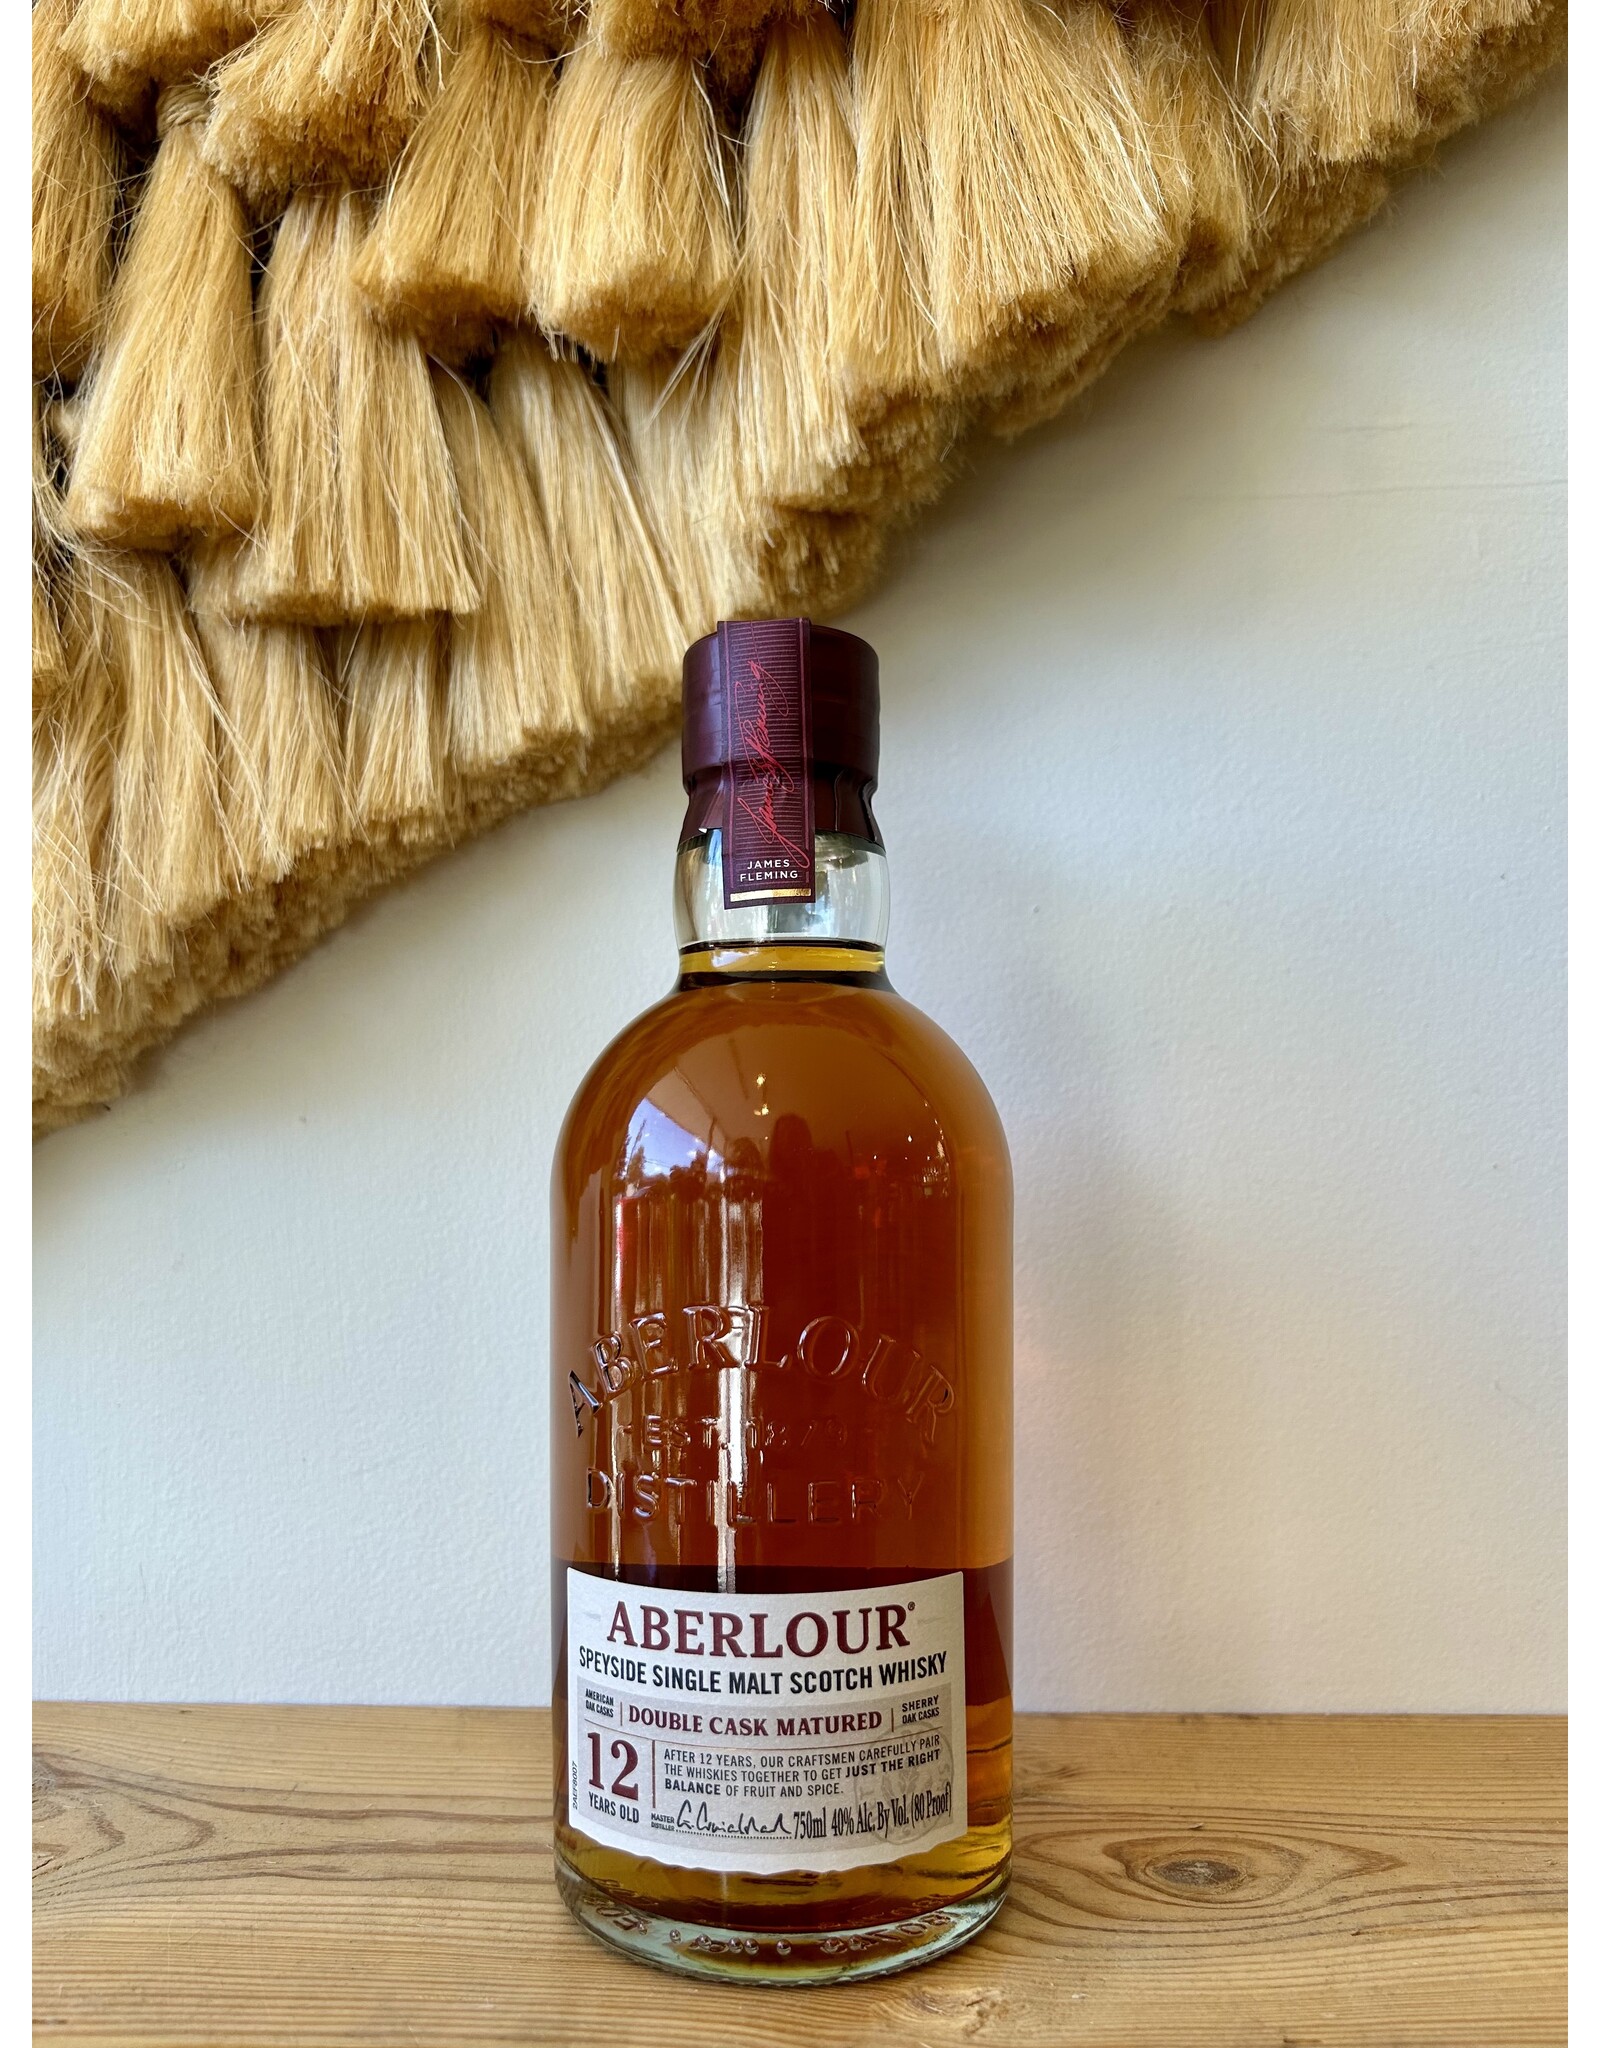 Aberlour Speyside Single Malt Scotch Whisky